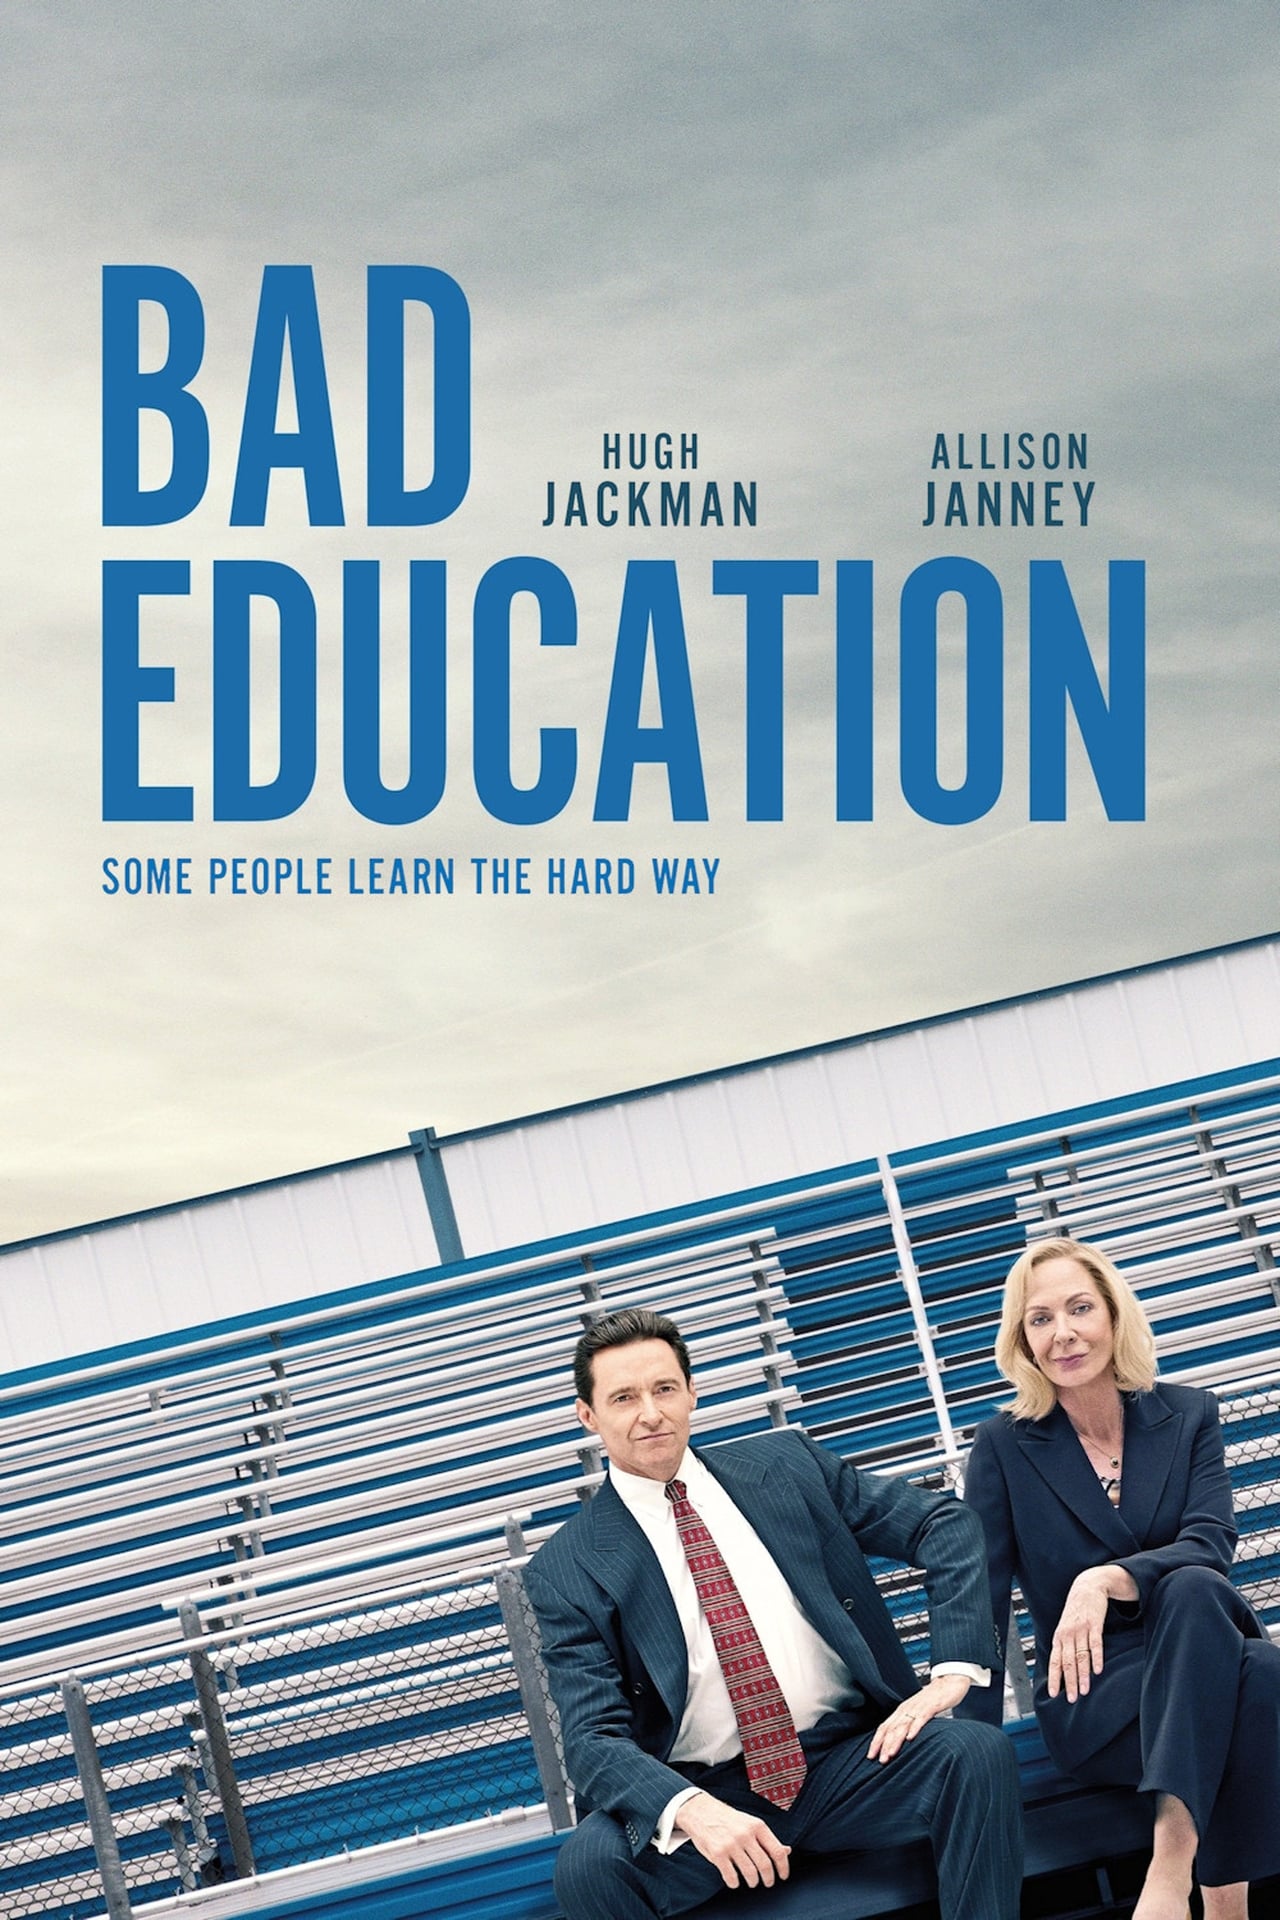 Bad Education Movie Synopsis, Summary, Plot & Film Details